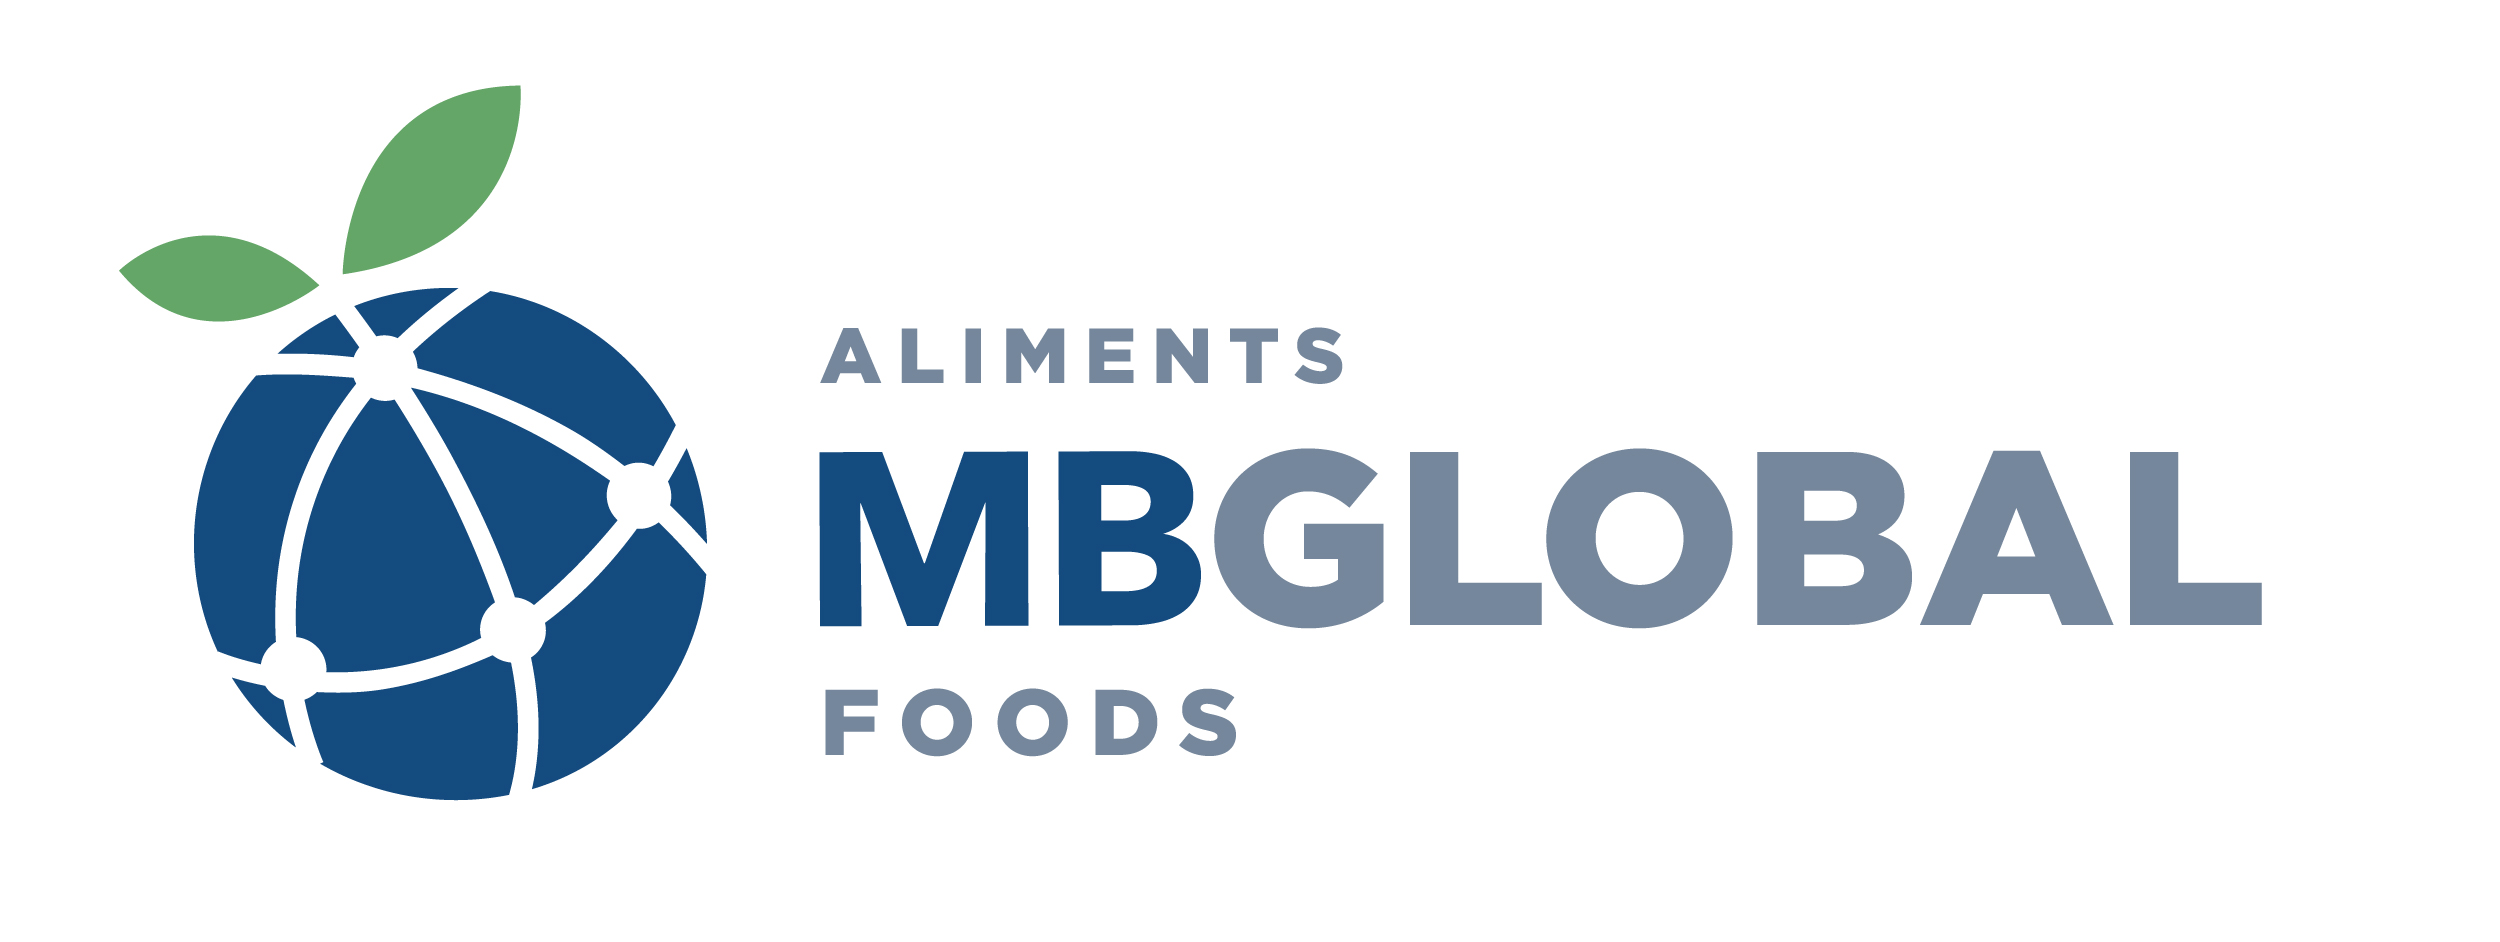 MBG-Global-Logo-HiRes.jpg